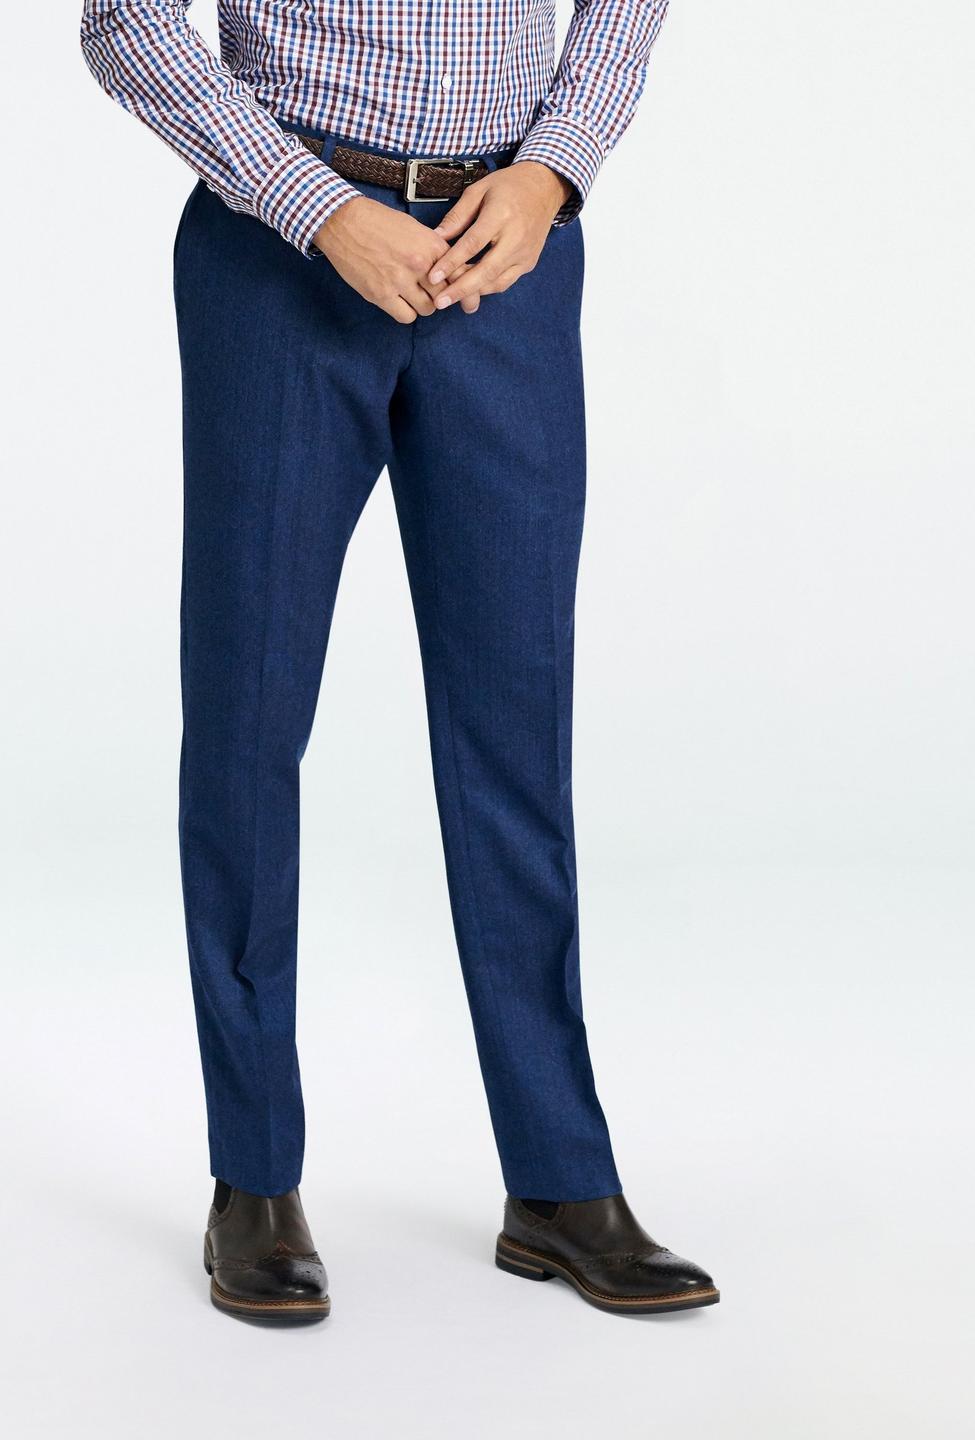 Blue pants - Prescot Herringbone Design from Seasonal Indochino Collection